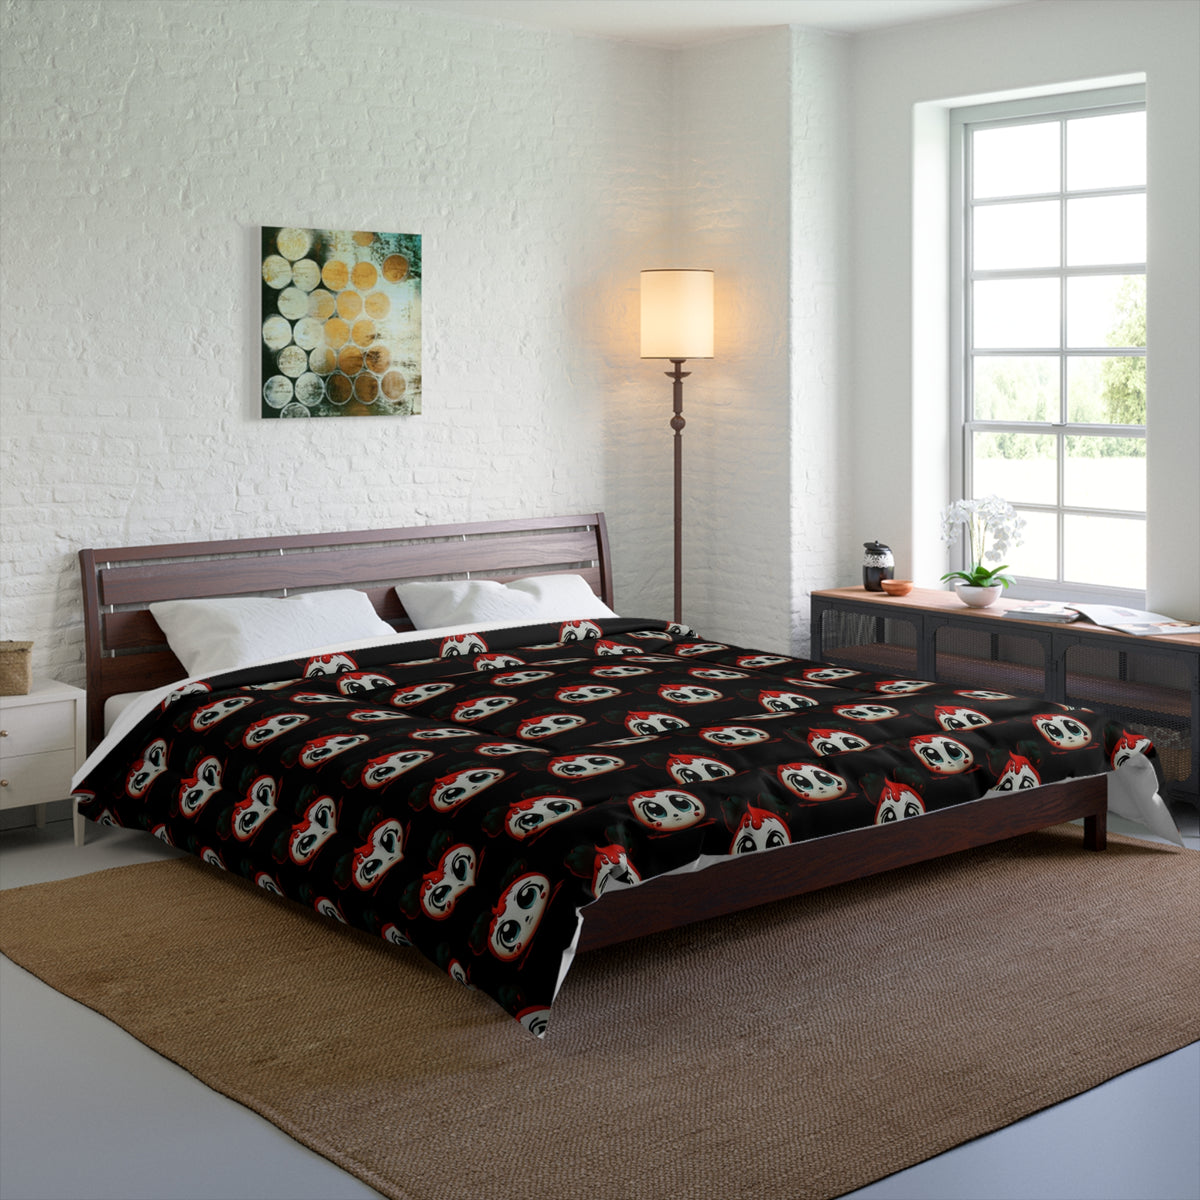 Killer Clown Dumpling Comforter - Quirky and Cozy Bedding for Unique Home Decor